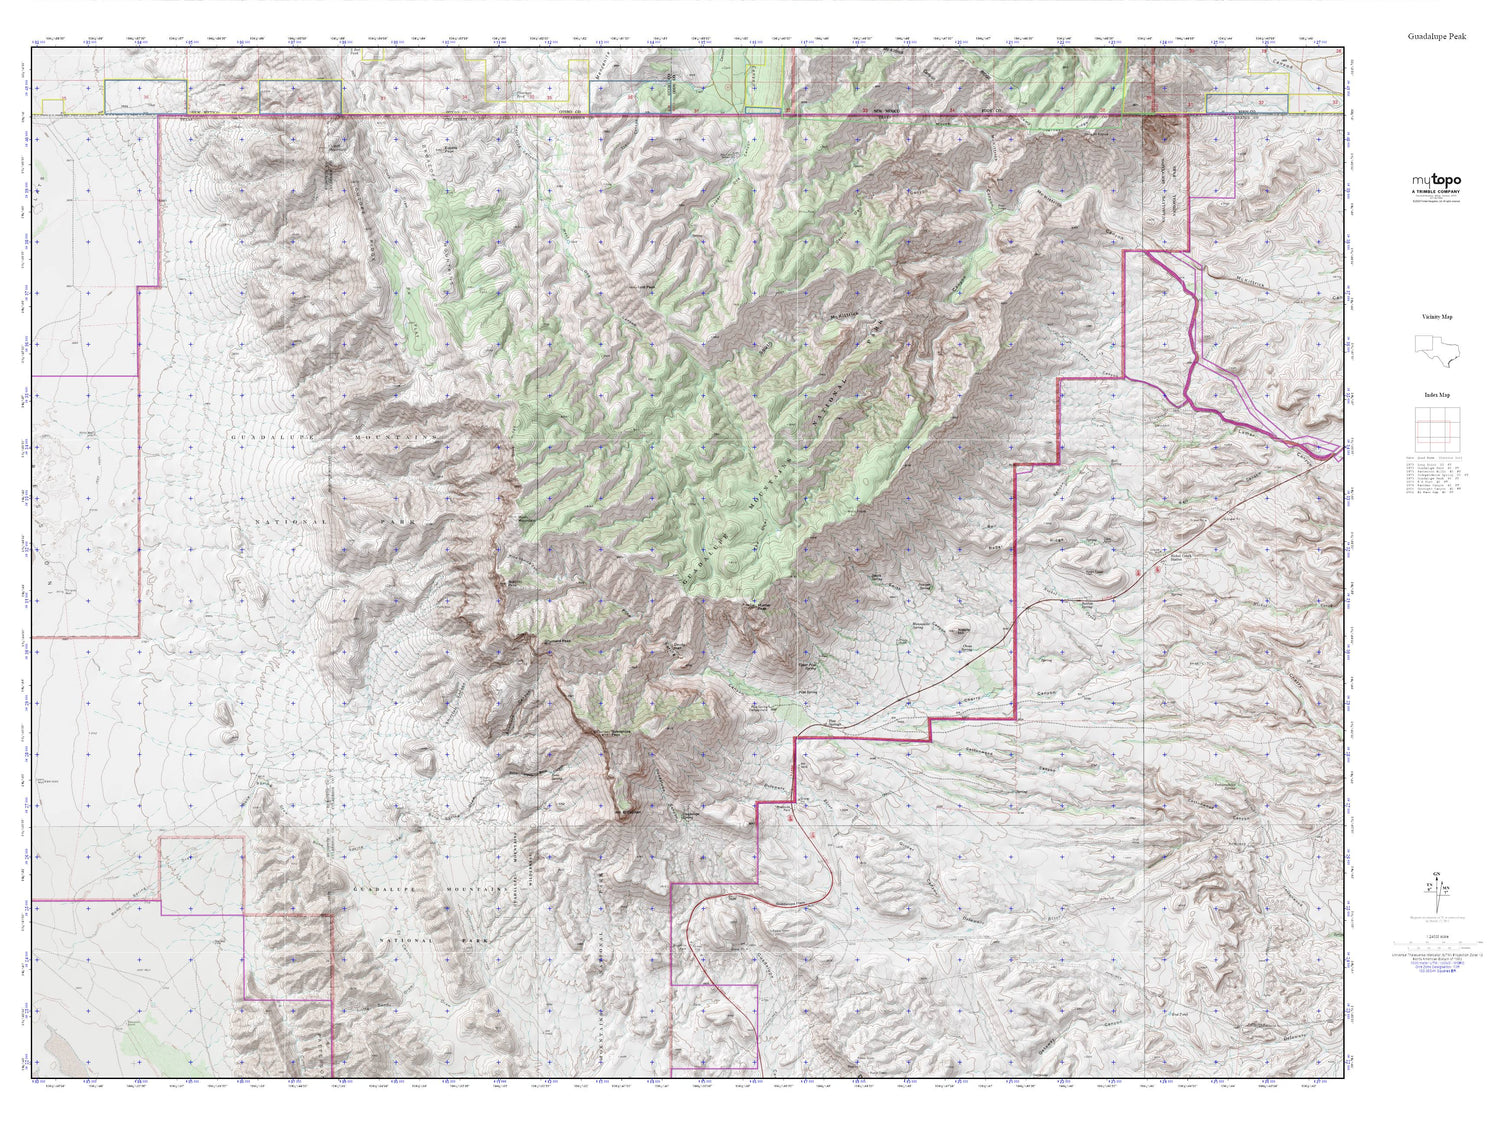 Guadalupe Peak MyTopo Explorer Series Map Image